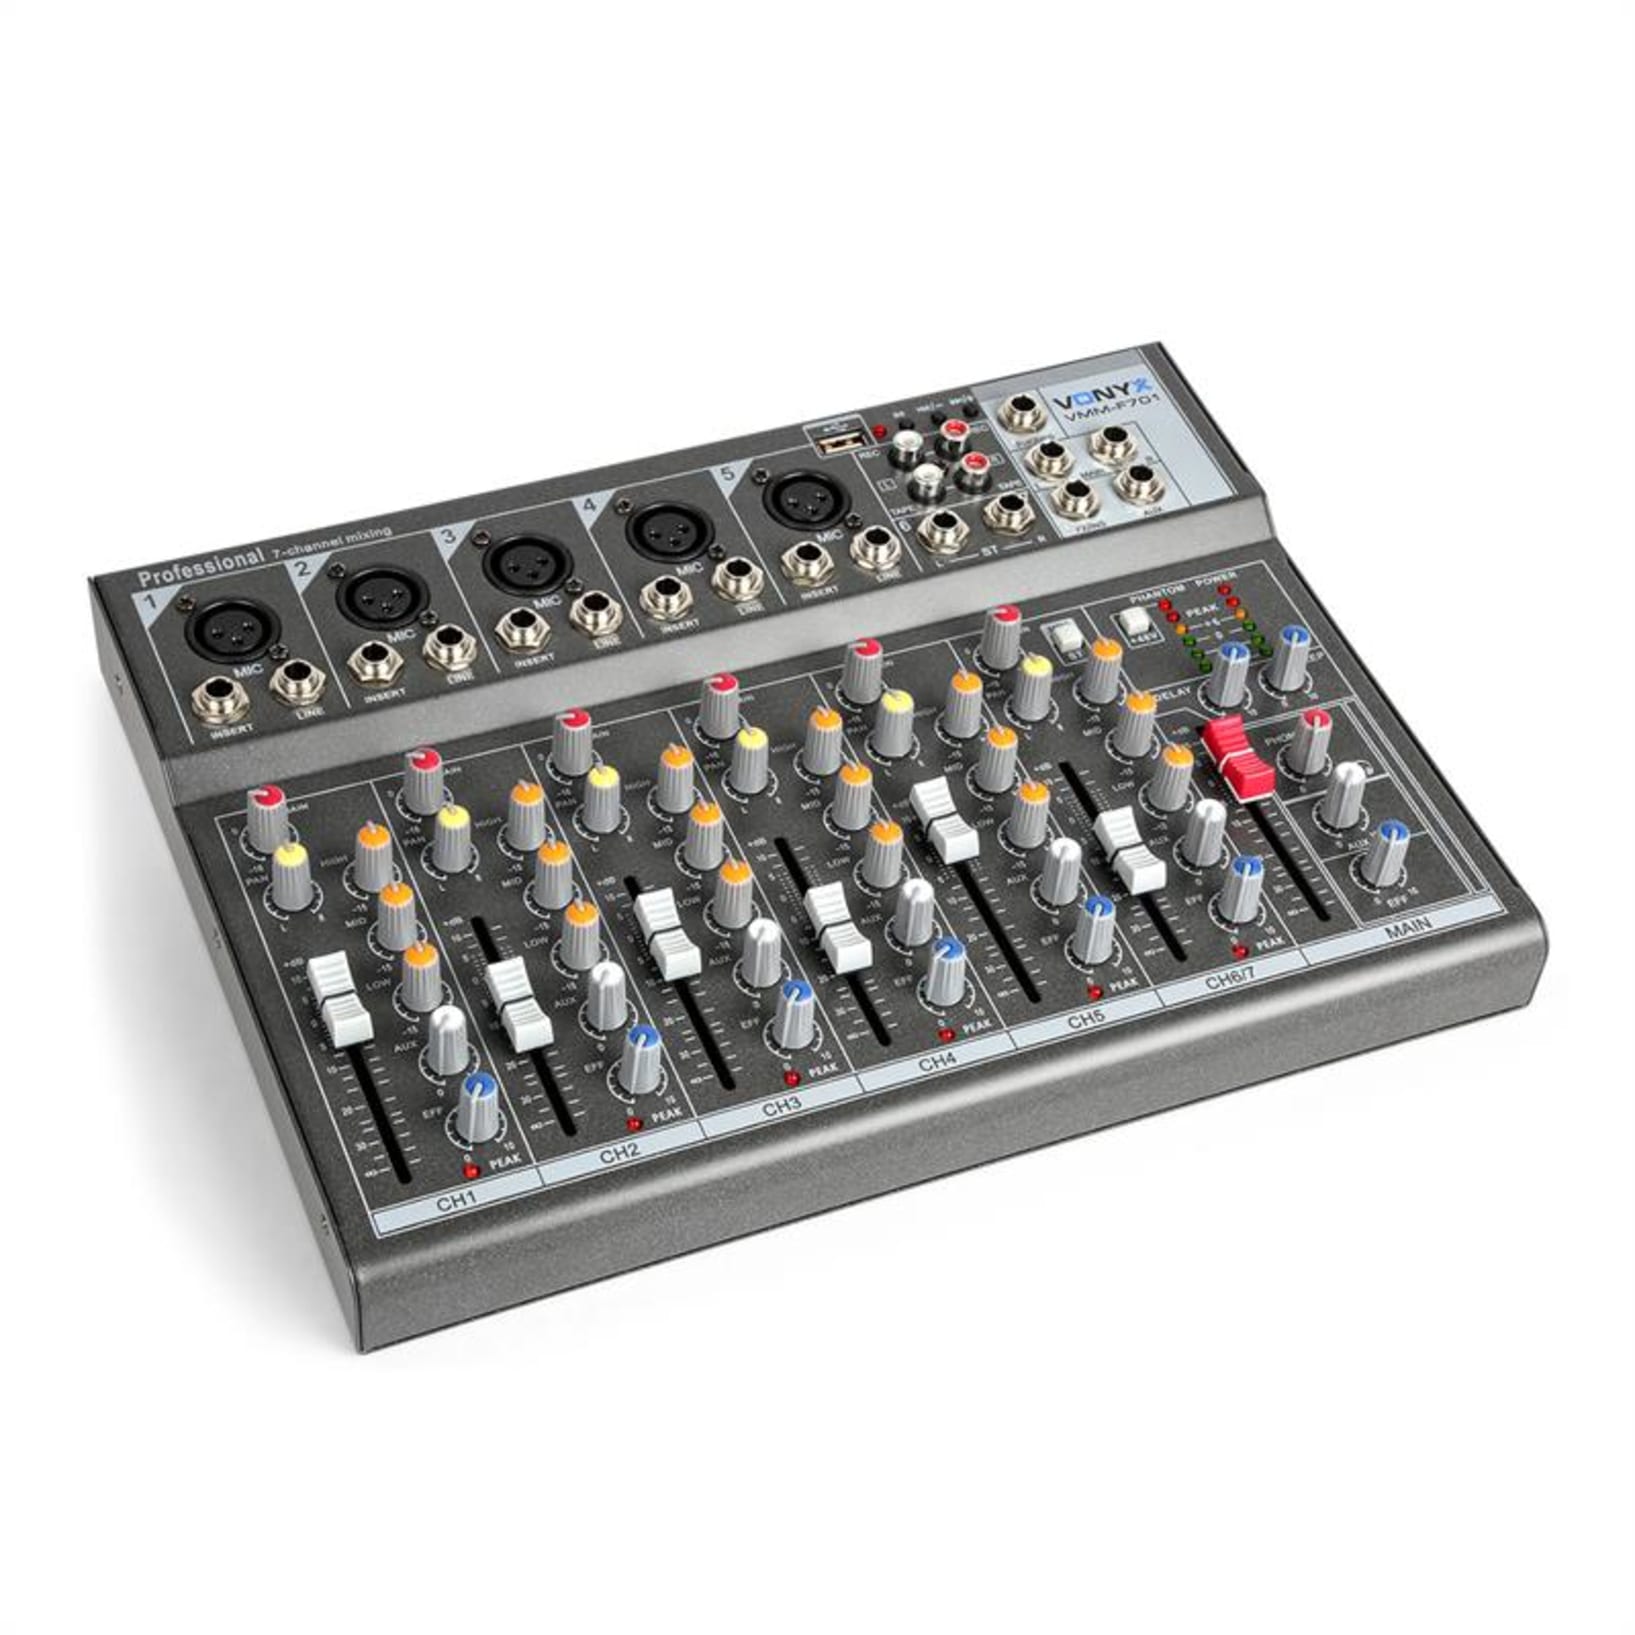 Table de mixage audio Bluetooth 7 canaux USB DJ Sound Console